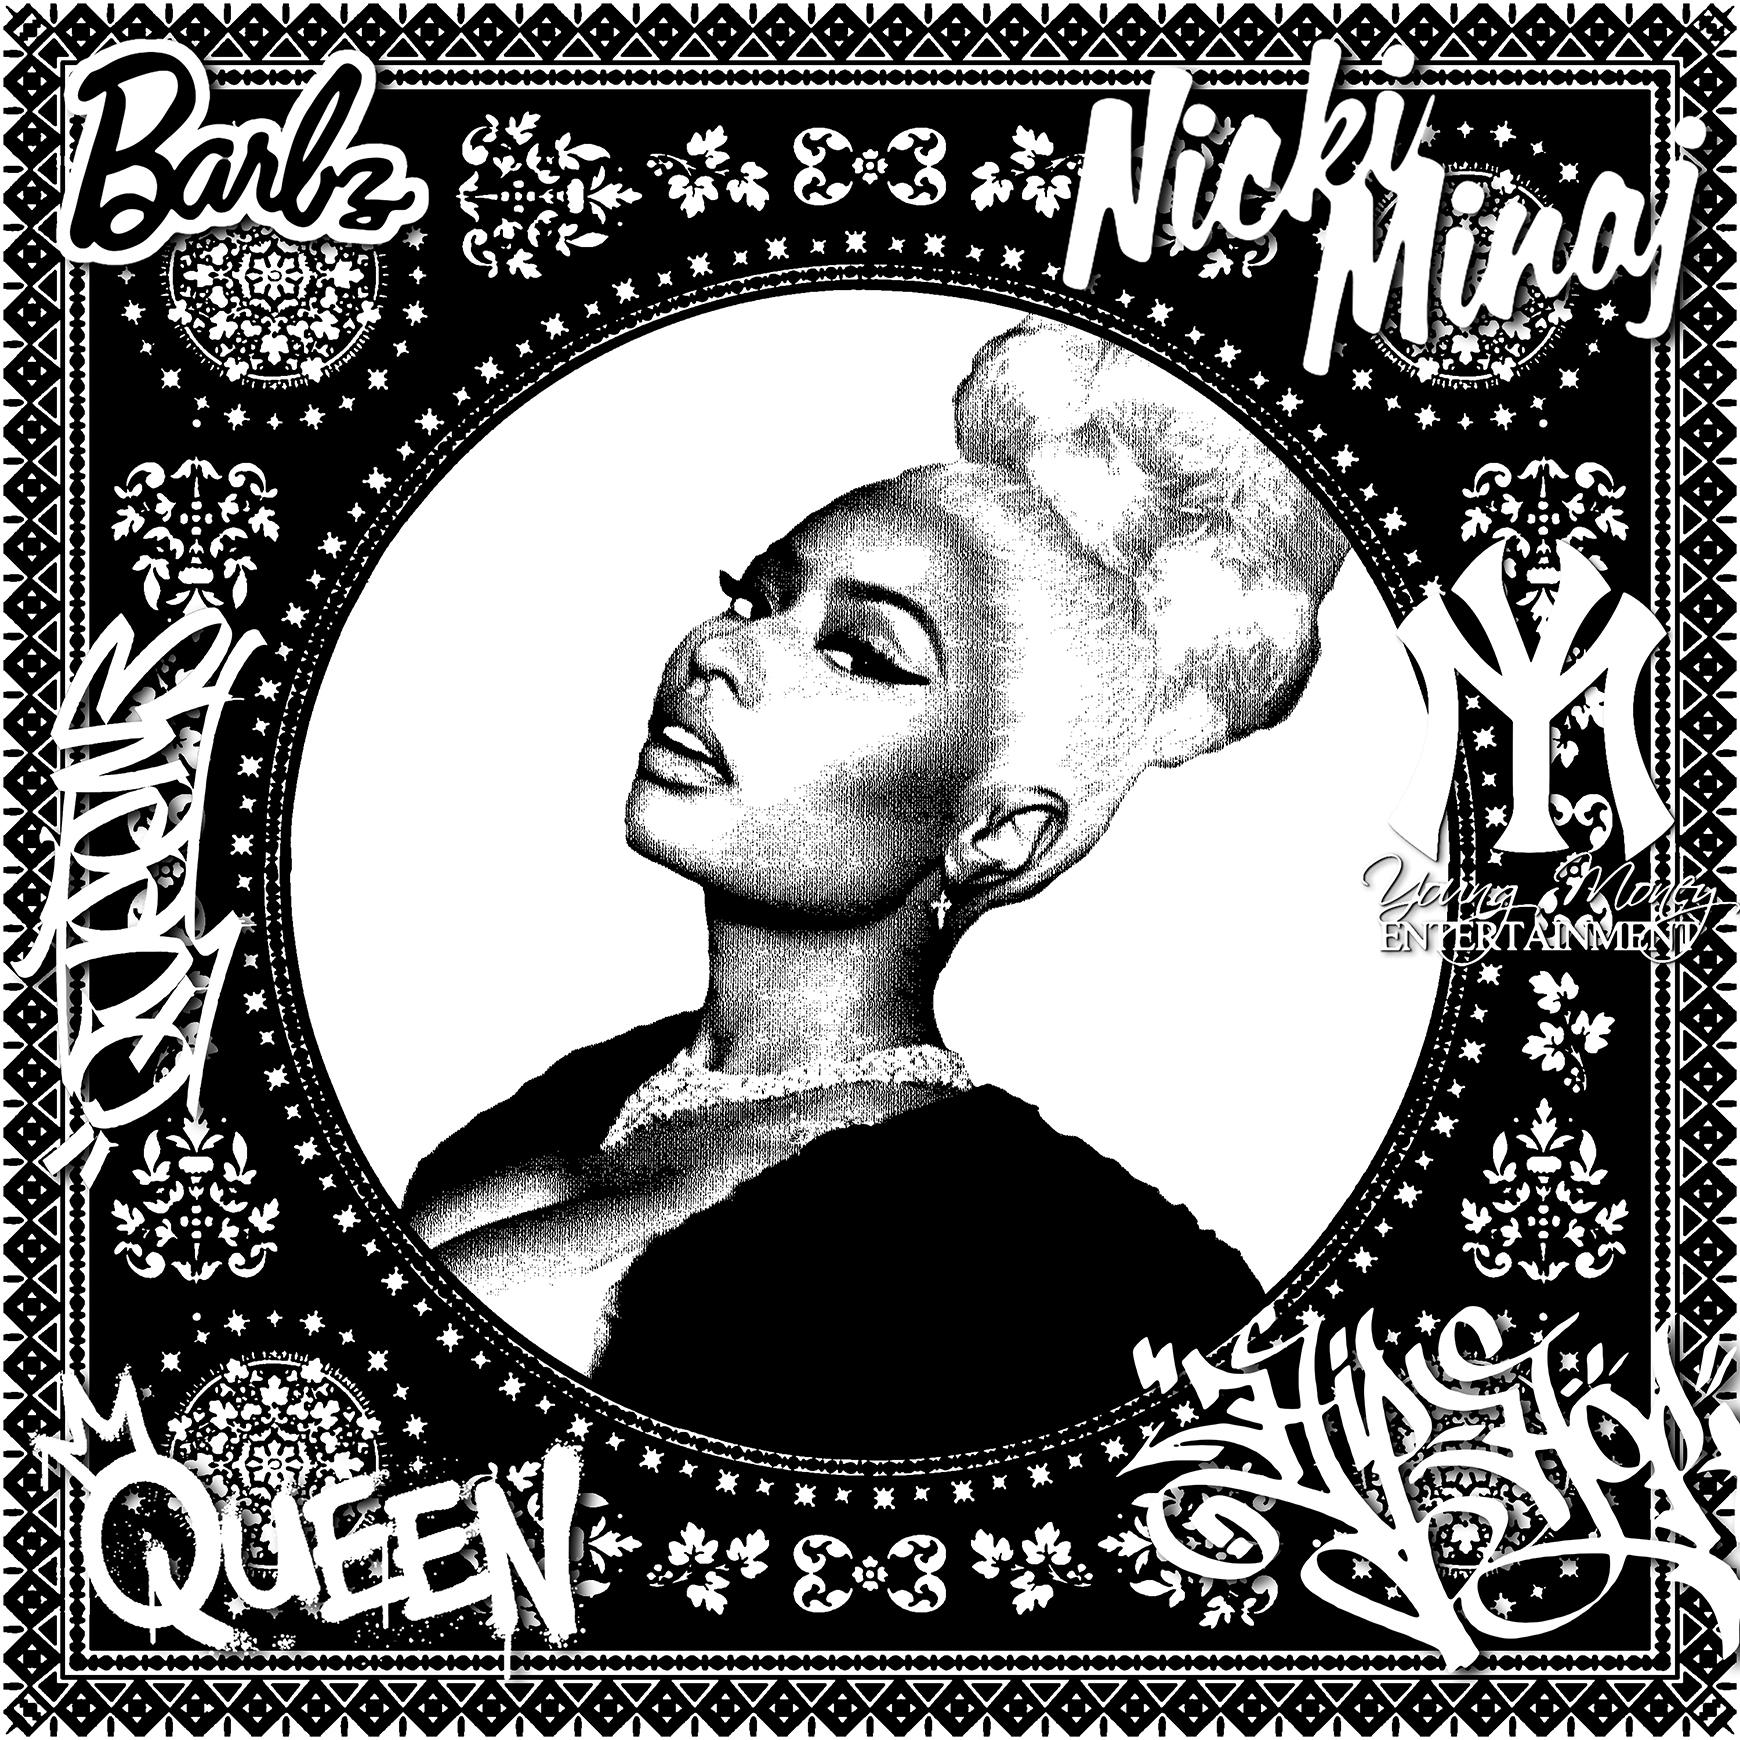 Nicki Minaj (Black & White) (50 ans, Hip Hop, Rap, Iconic, Artiste, Musician) - Print de Agent X